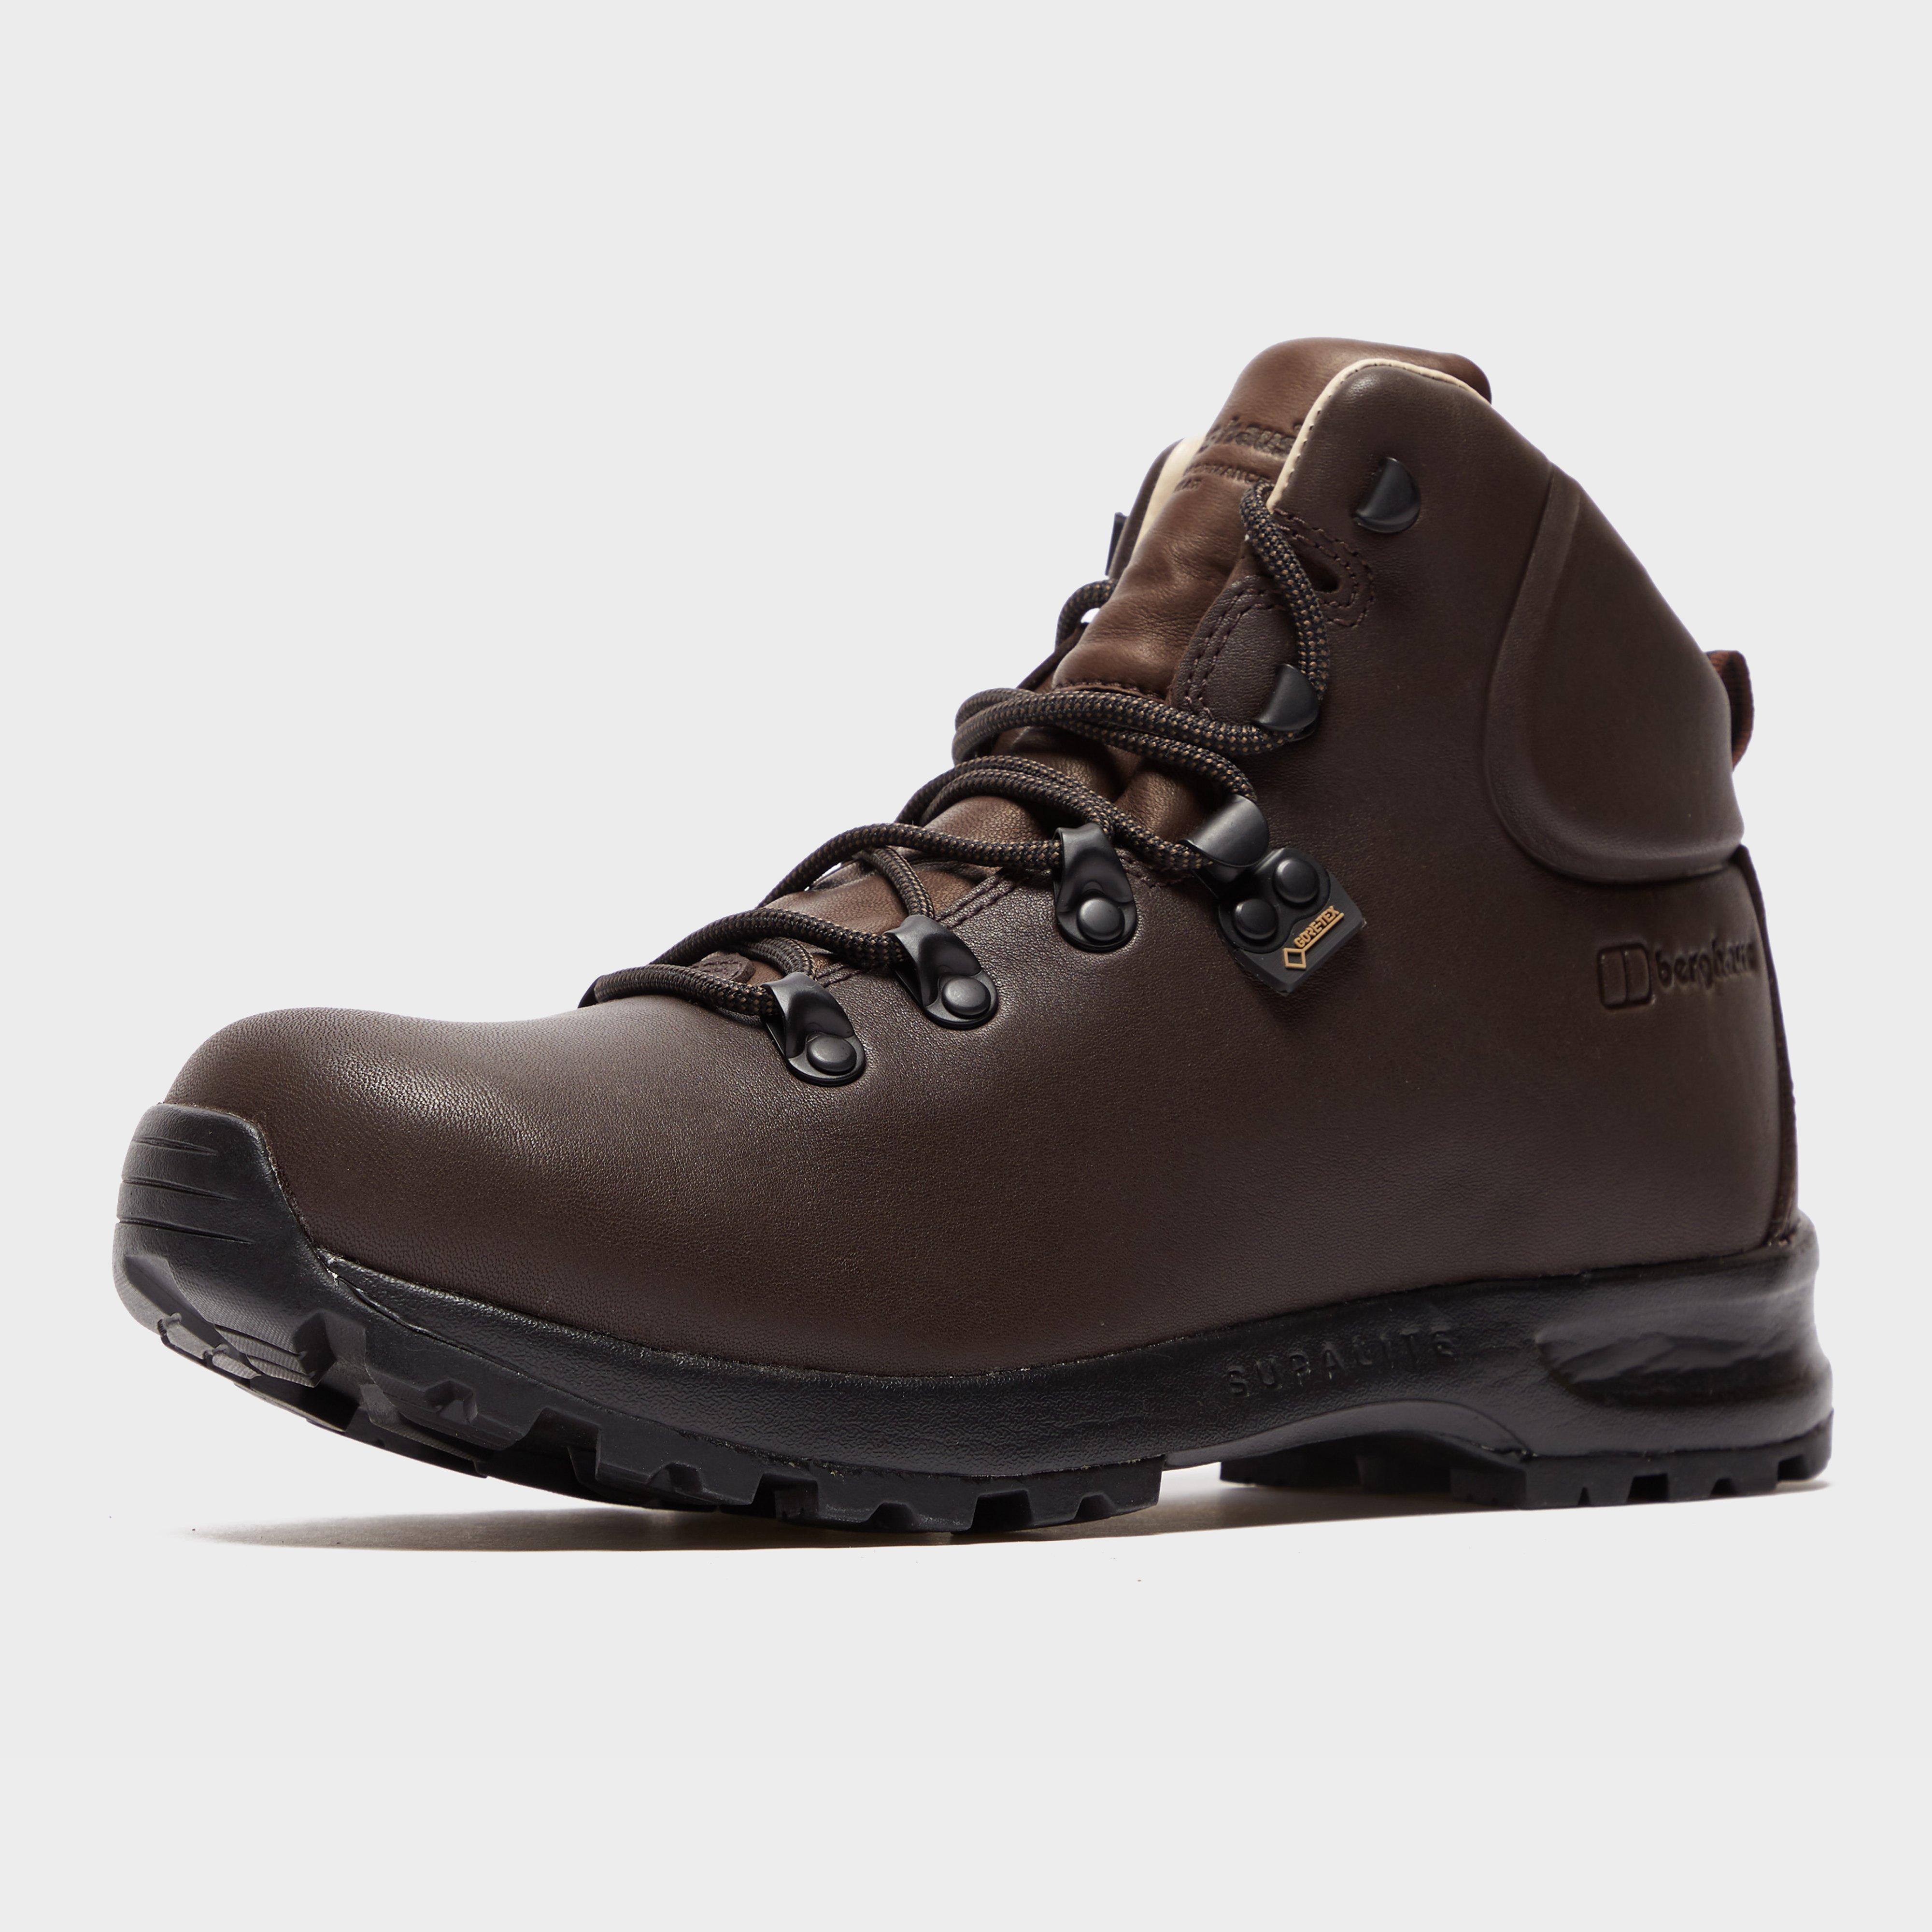 BERGHAUS Women's Supalite II GTX Walking Boots - Brown | eBay